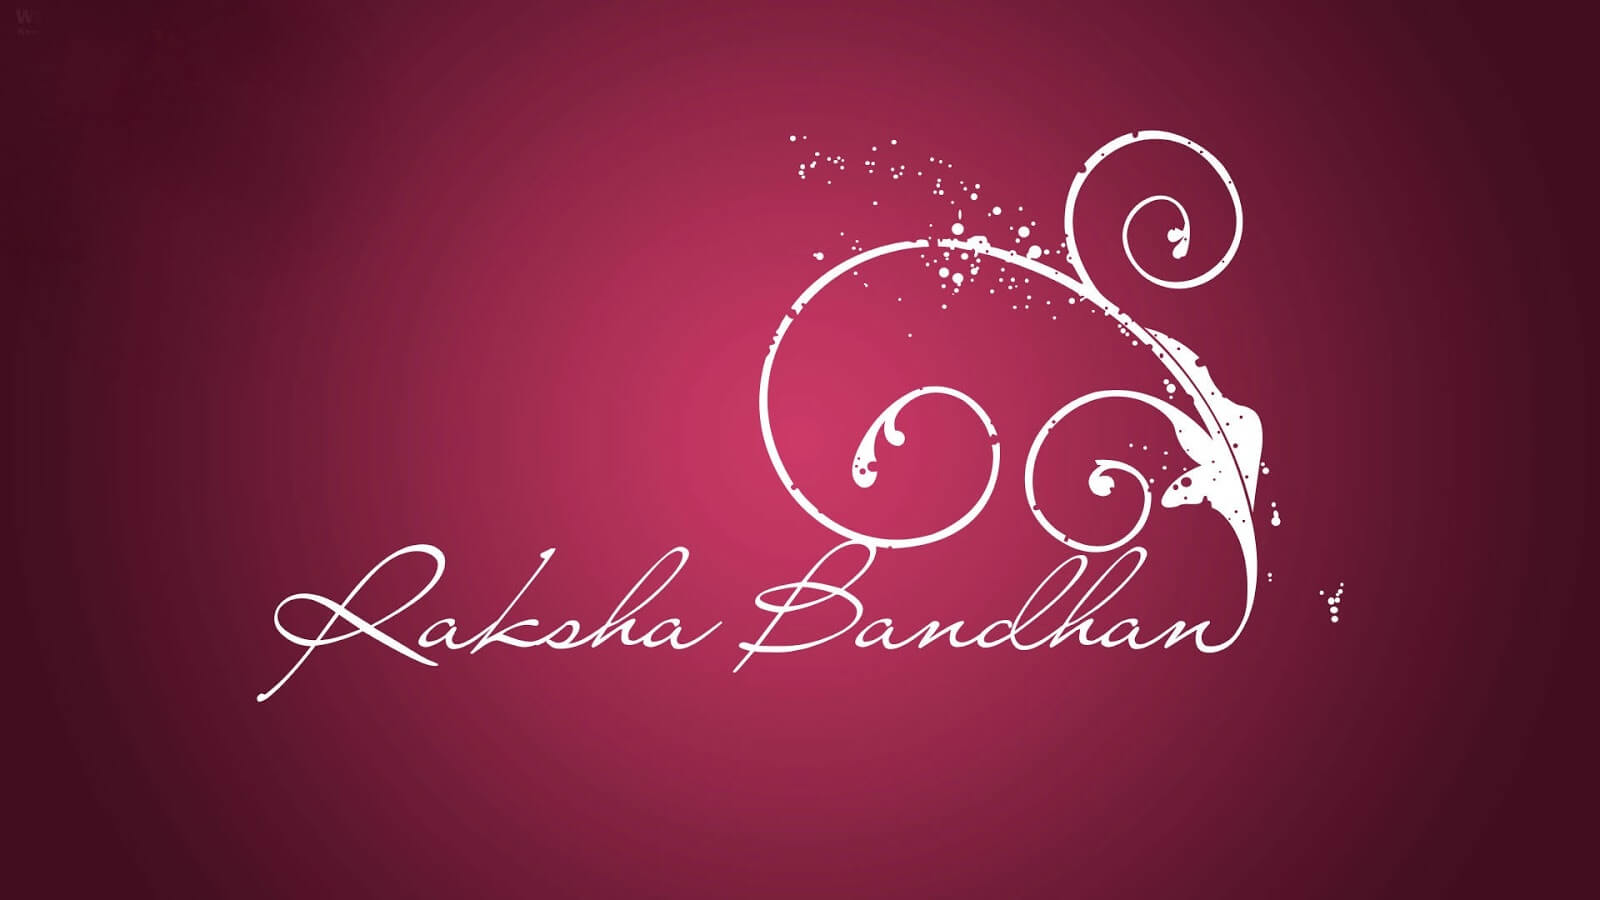 happy Raksha Bandhan images wallpapers greeting cards